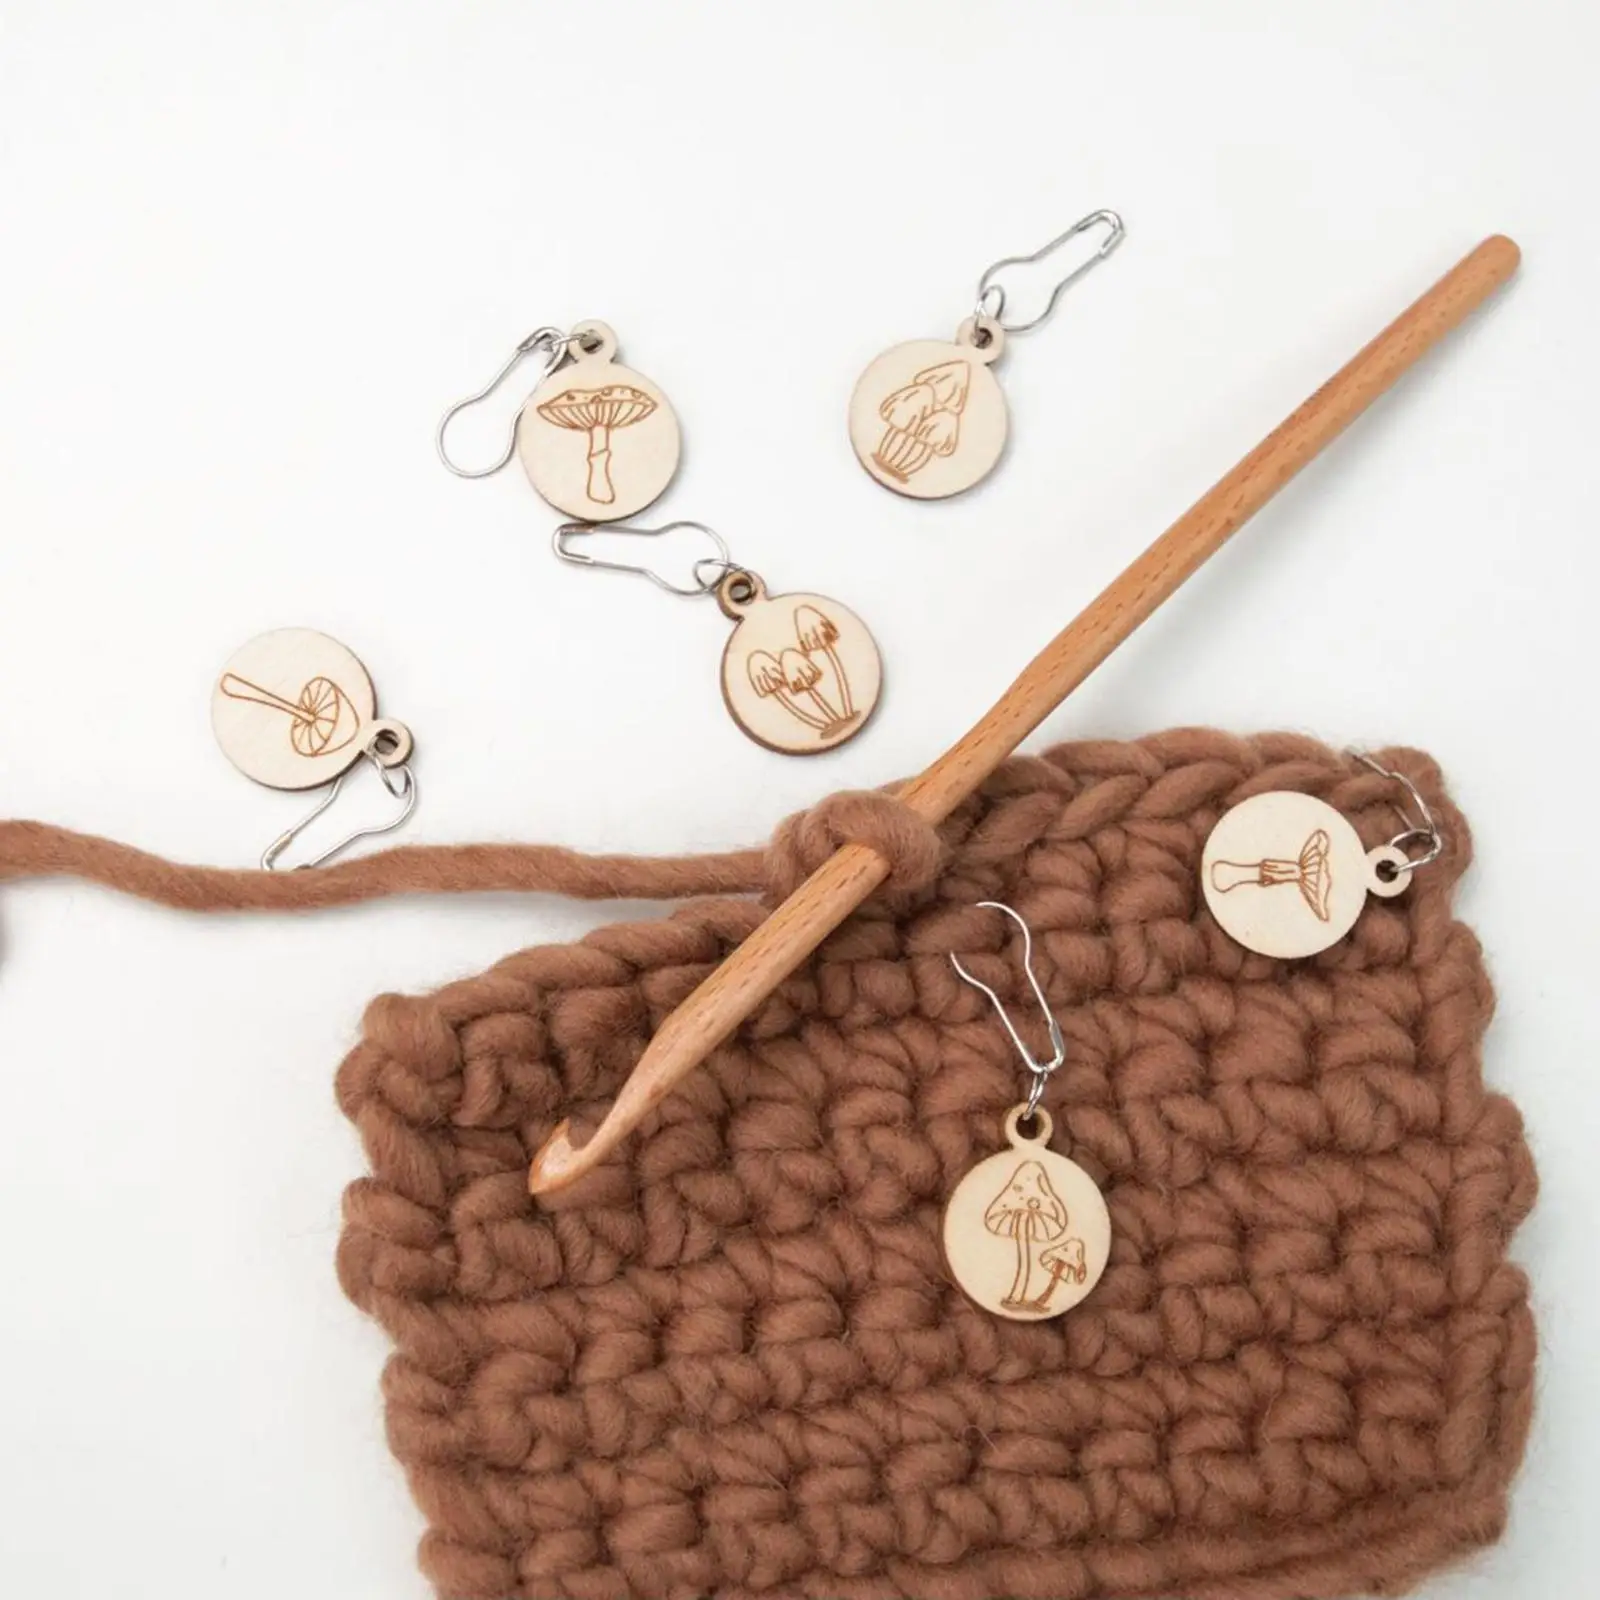 6x Stitch Markers Mushroom Pattern Crochet Accessories Accessories Knitting Supplies Handmade Craft Cute Knitting Stitch Markers